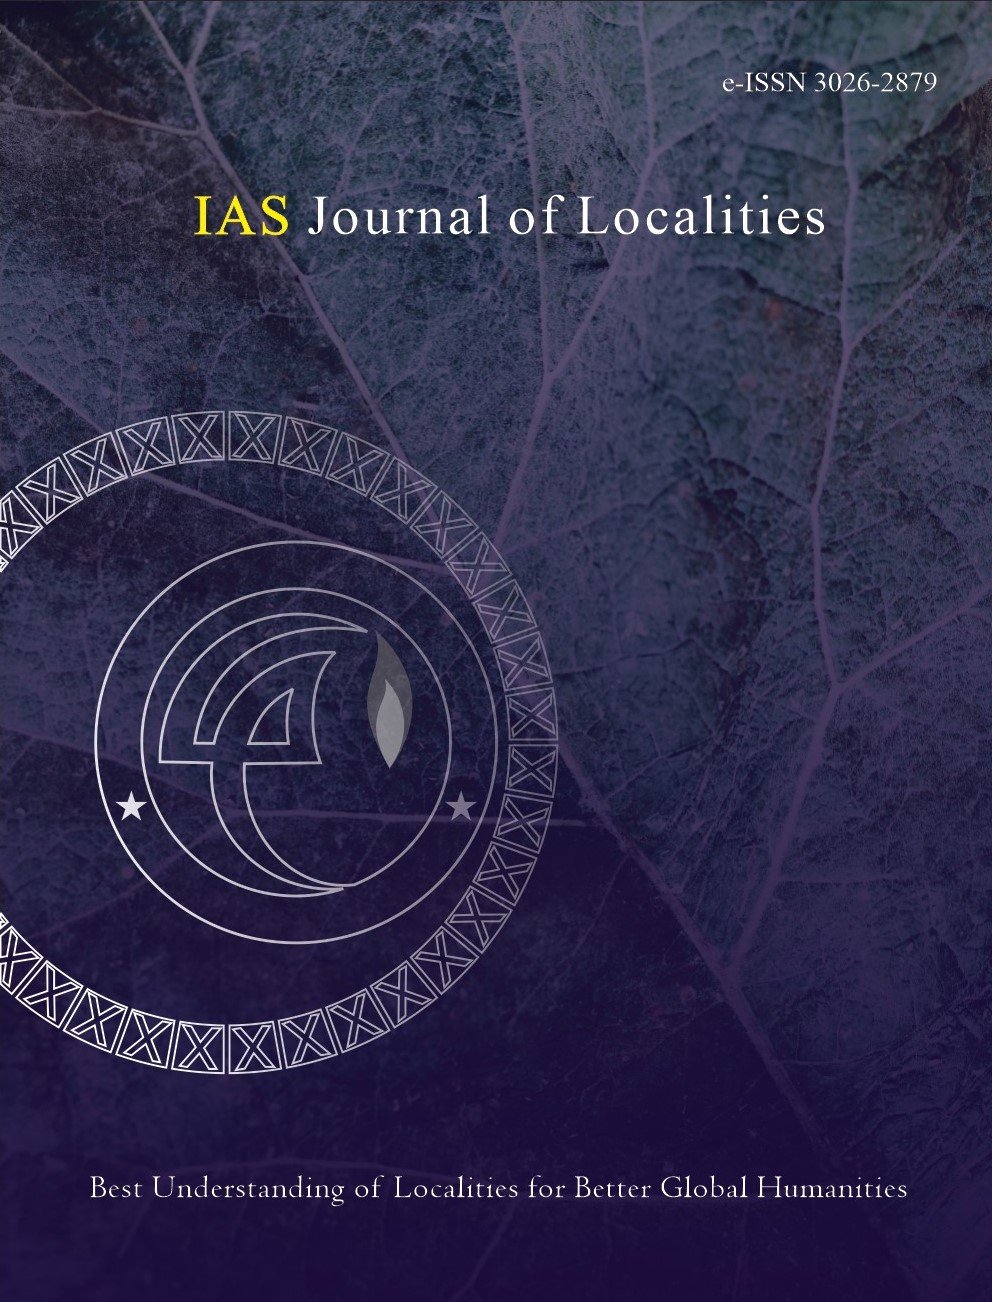 IAS Journal of Localities